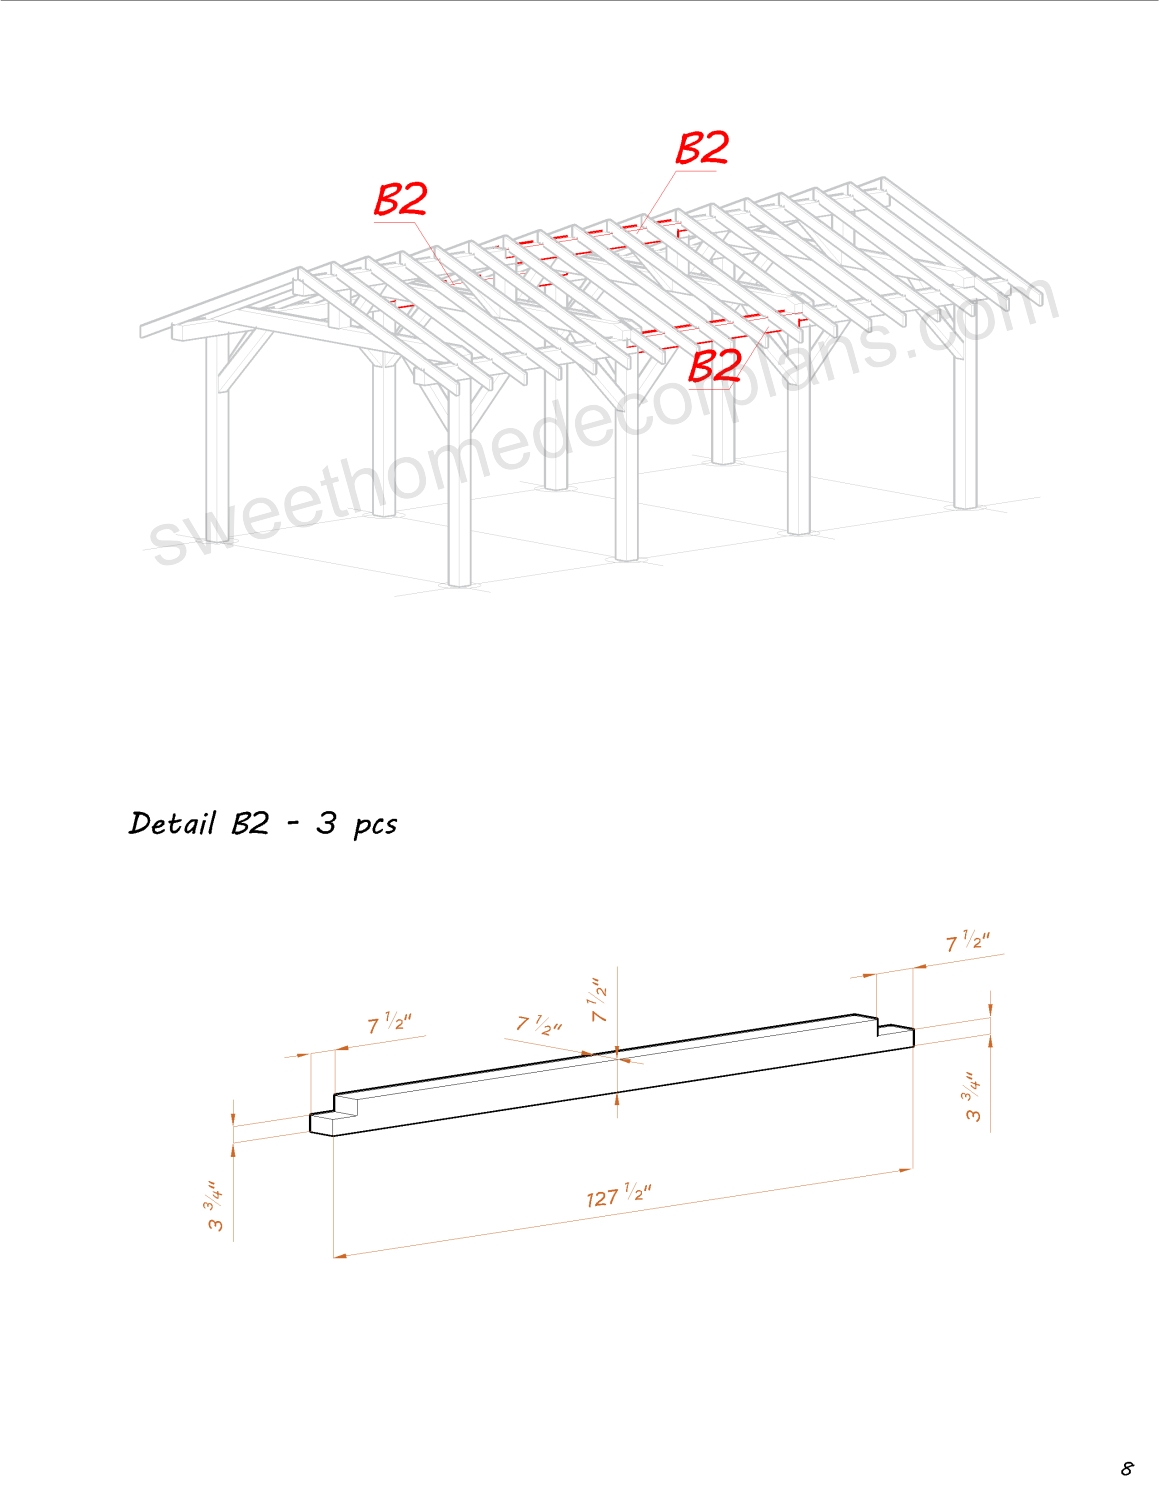 Diy-14-х-30-gable-pavilion-plans-in-pdf-carport-patio-gazebo